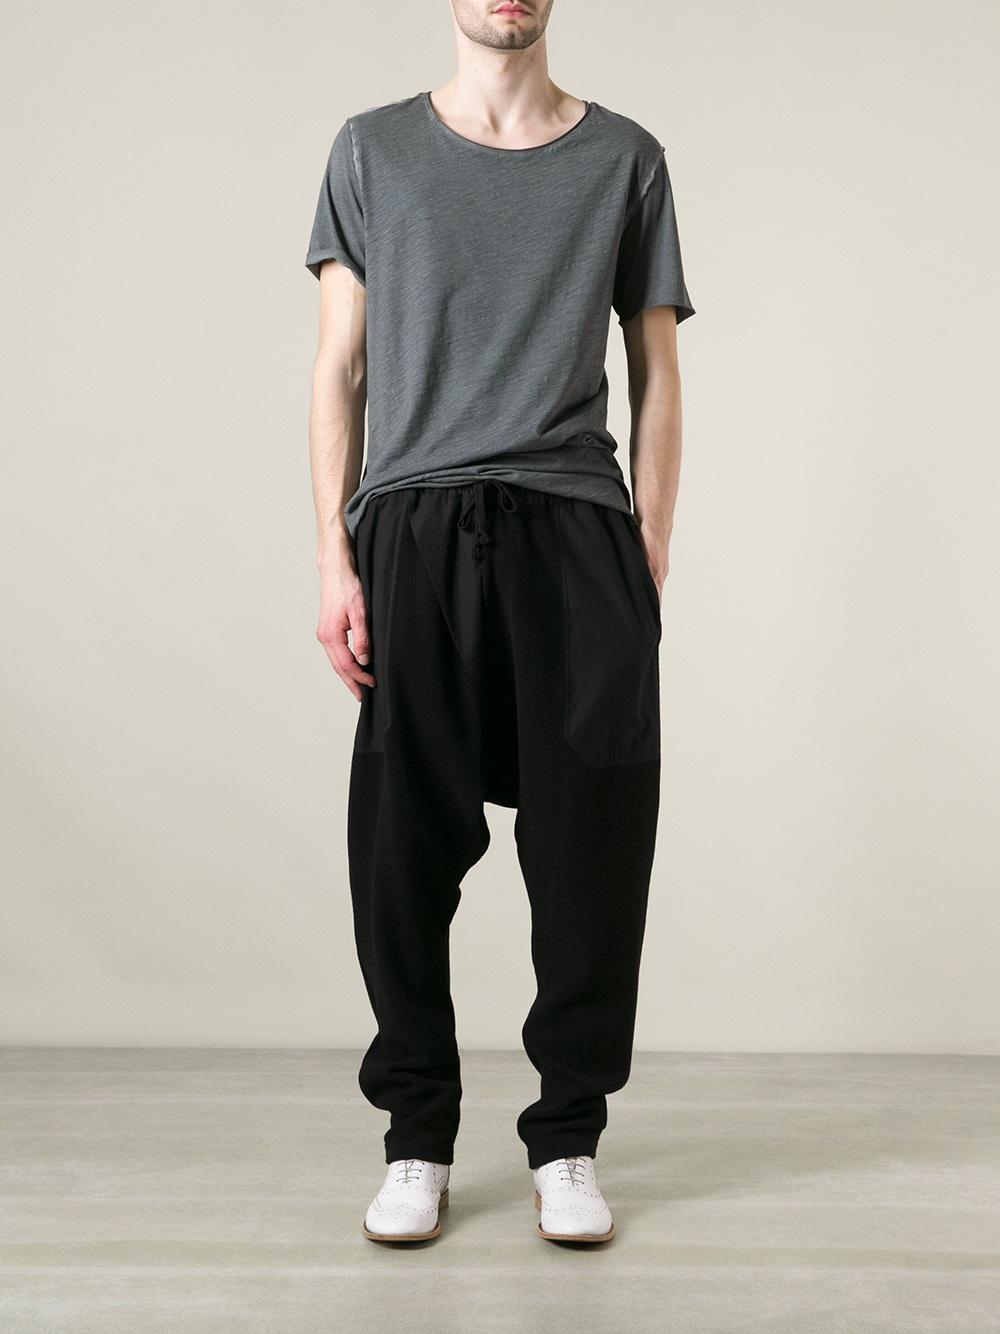 Lyst - Damir Doma Panelled Track Pants in Black for Men